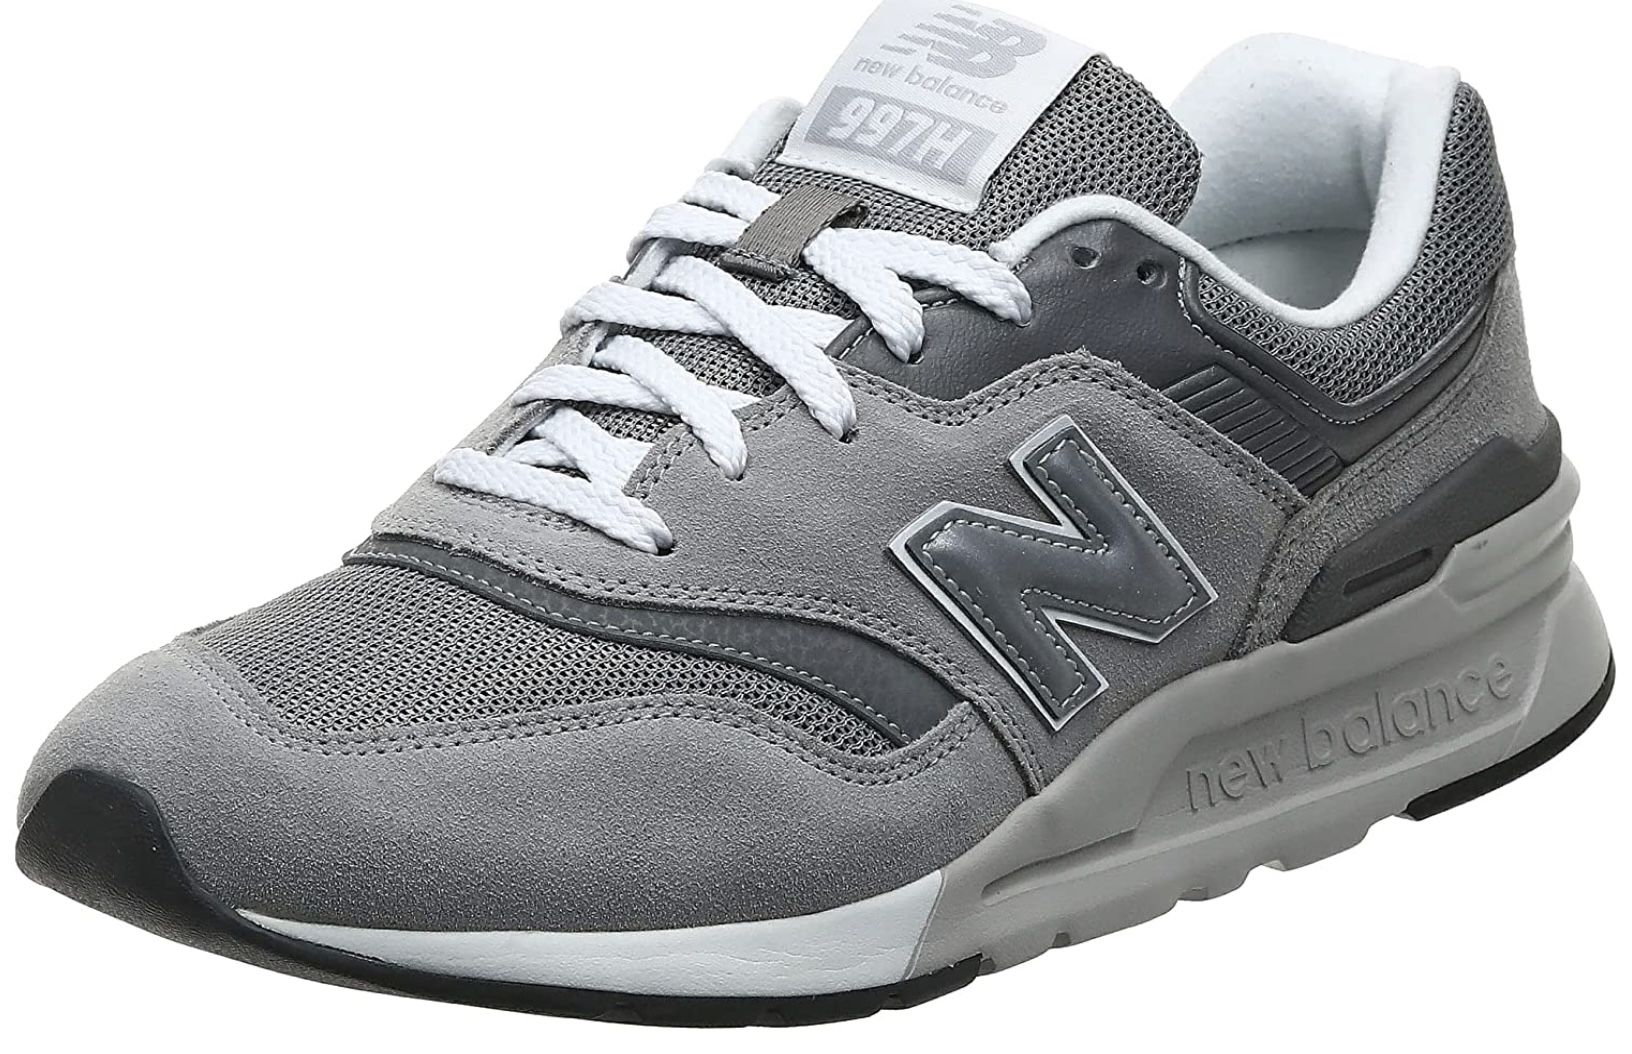 New Balance Herren 997H Core Trainers Sneaker in Grau für 49,95€ (statt 65€)